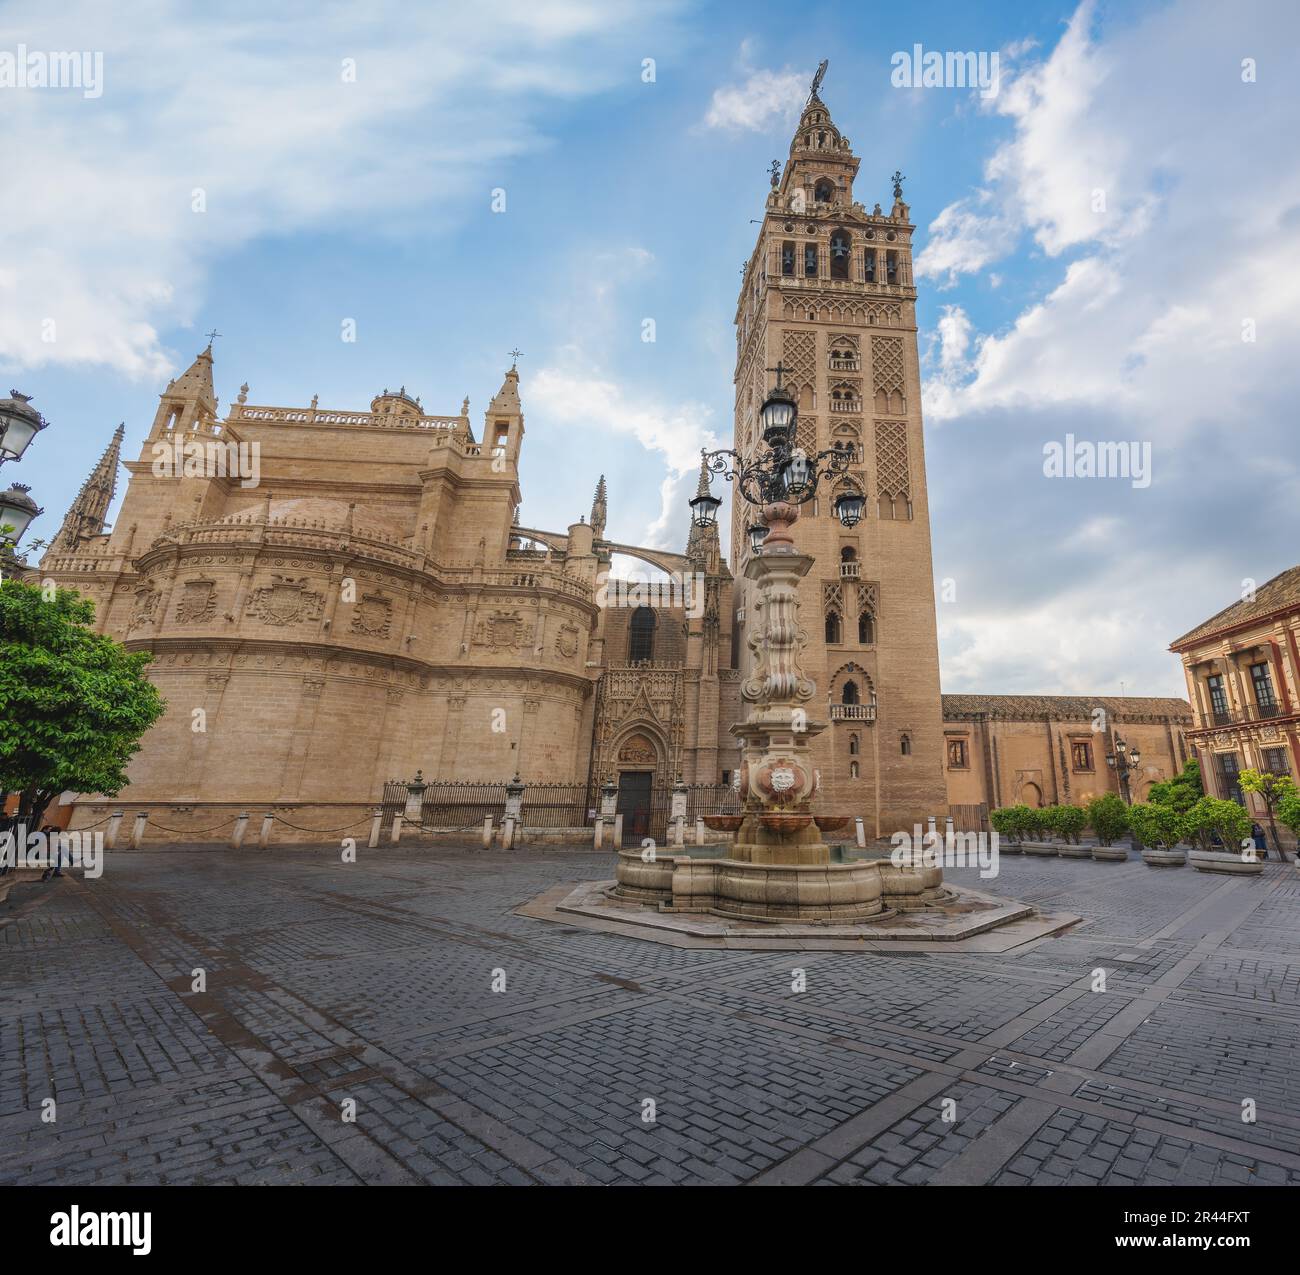 Kathedrale von Sevilla am Plaza Virgen de Los Reyes Square - Sevilla, Andalusien, Spanien Stockfoto